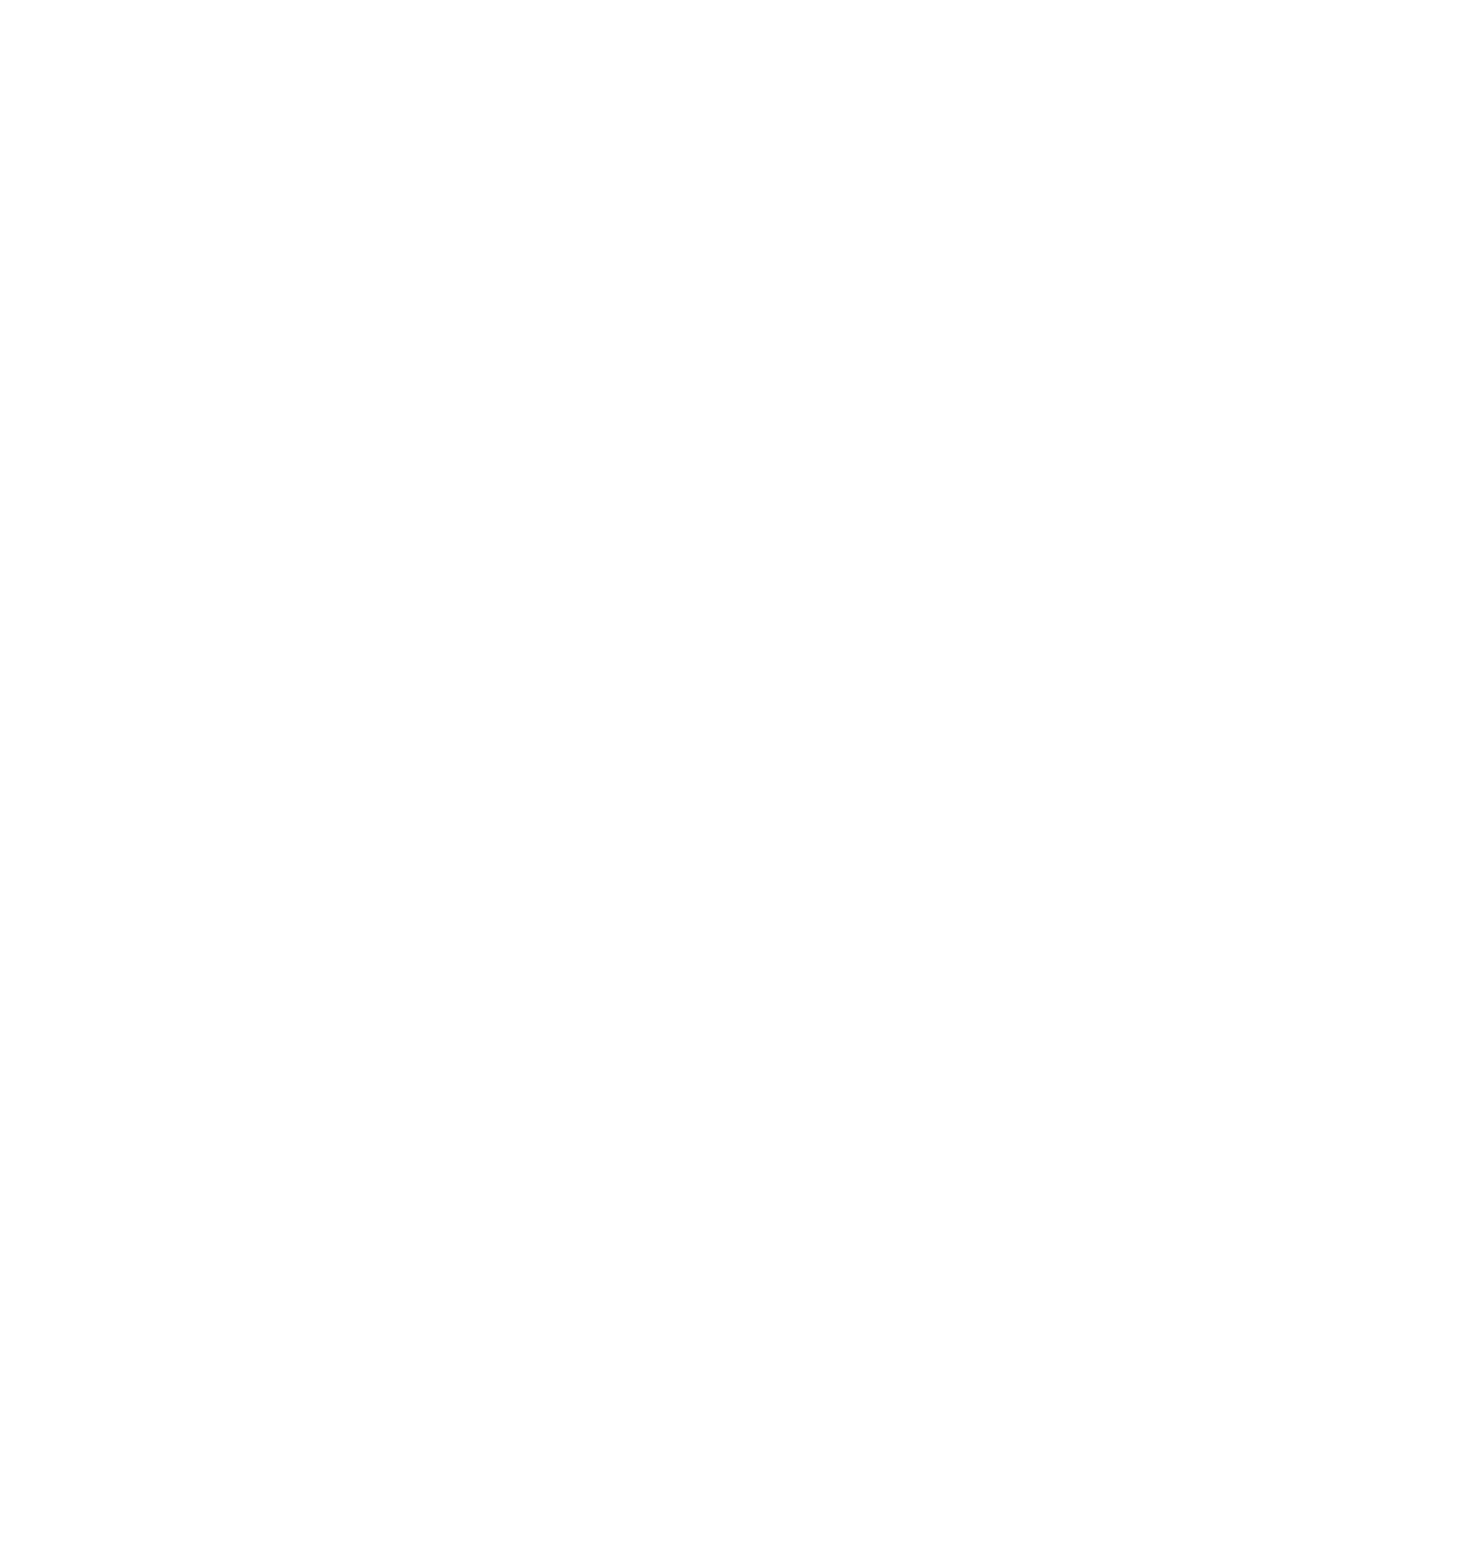 OPAP (Organization of Football Prognostics) logo for dark backgrounds (transparent PNG)